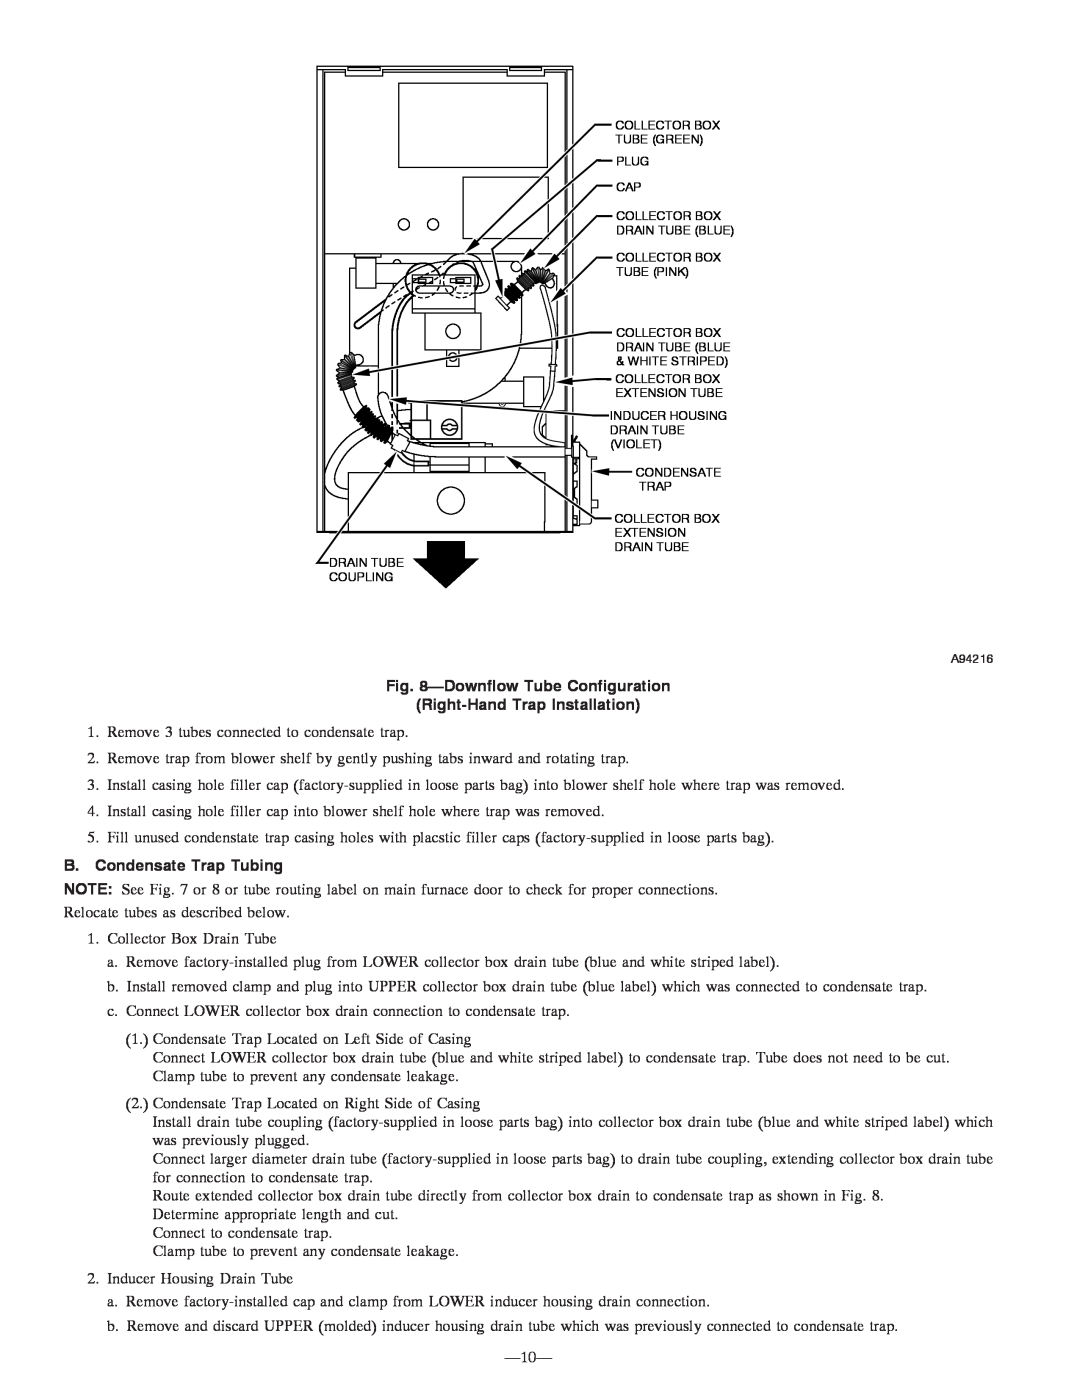 Bryant 355MAV instruction manual DownflowTube Configuration, Right-HandTrap Installation, B. Condensate Trap Tubing 